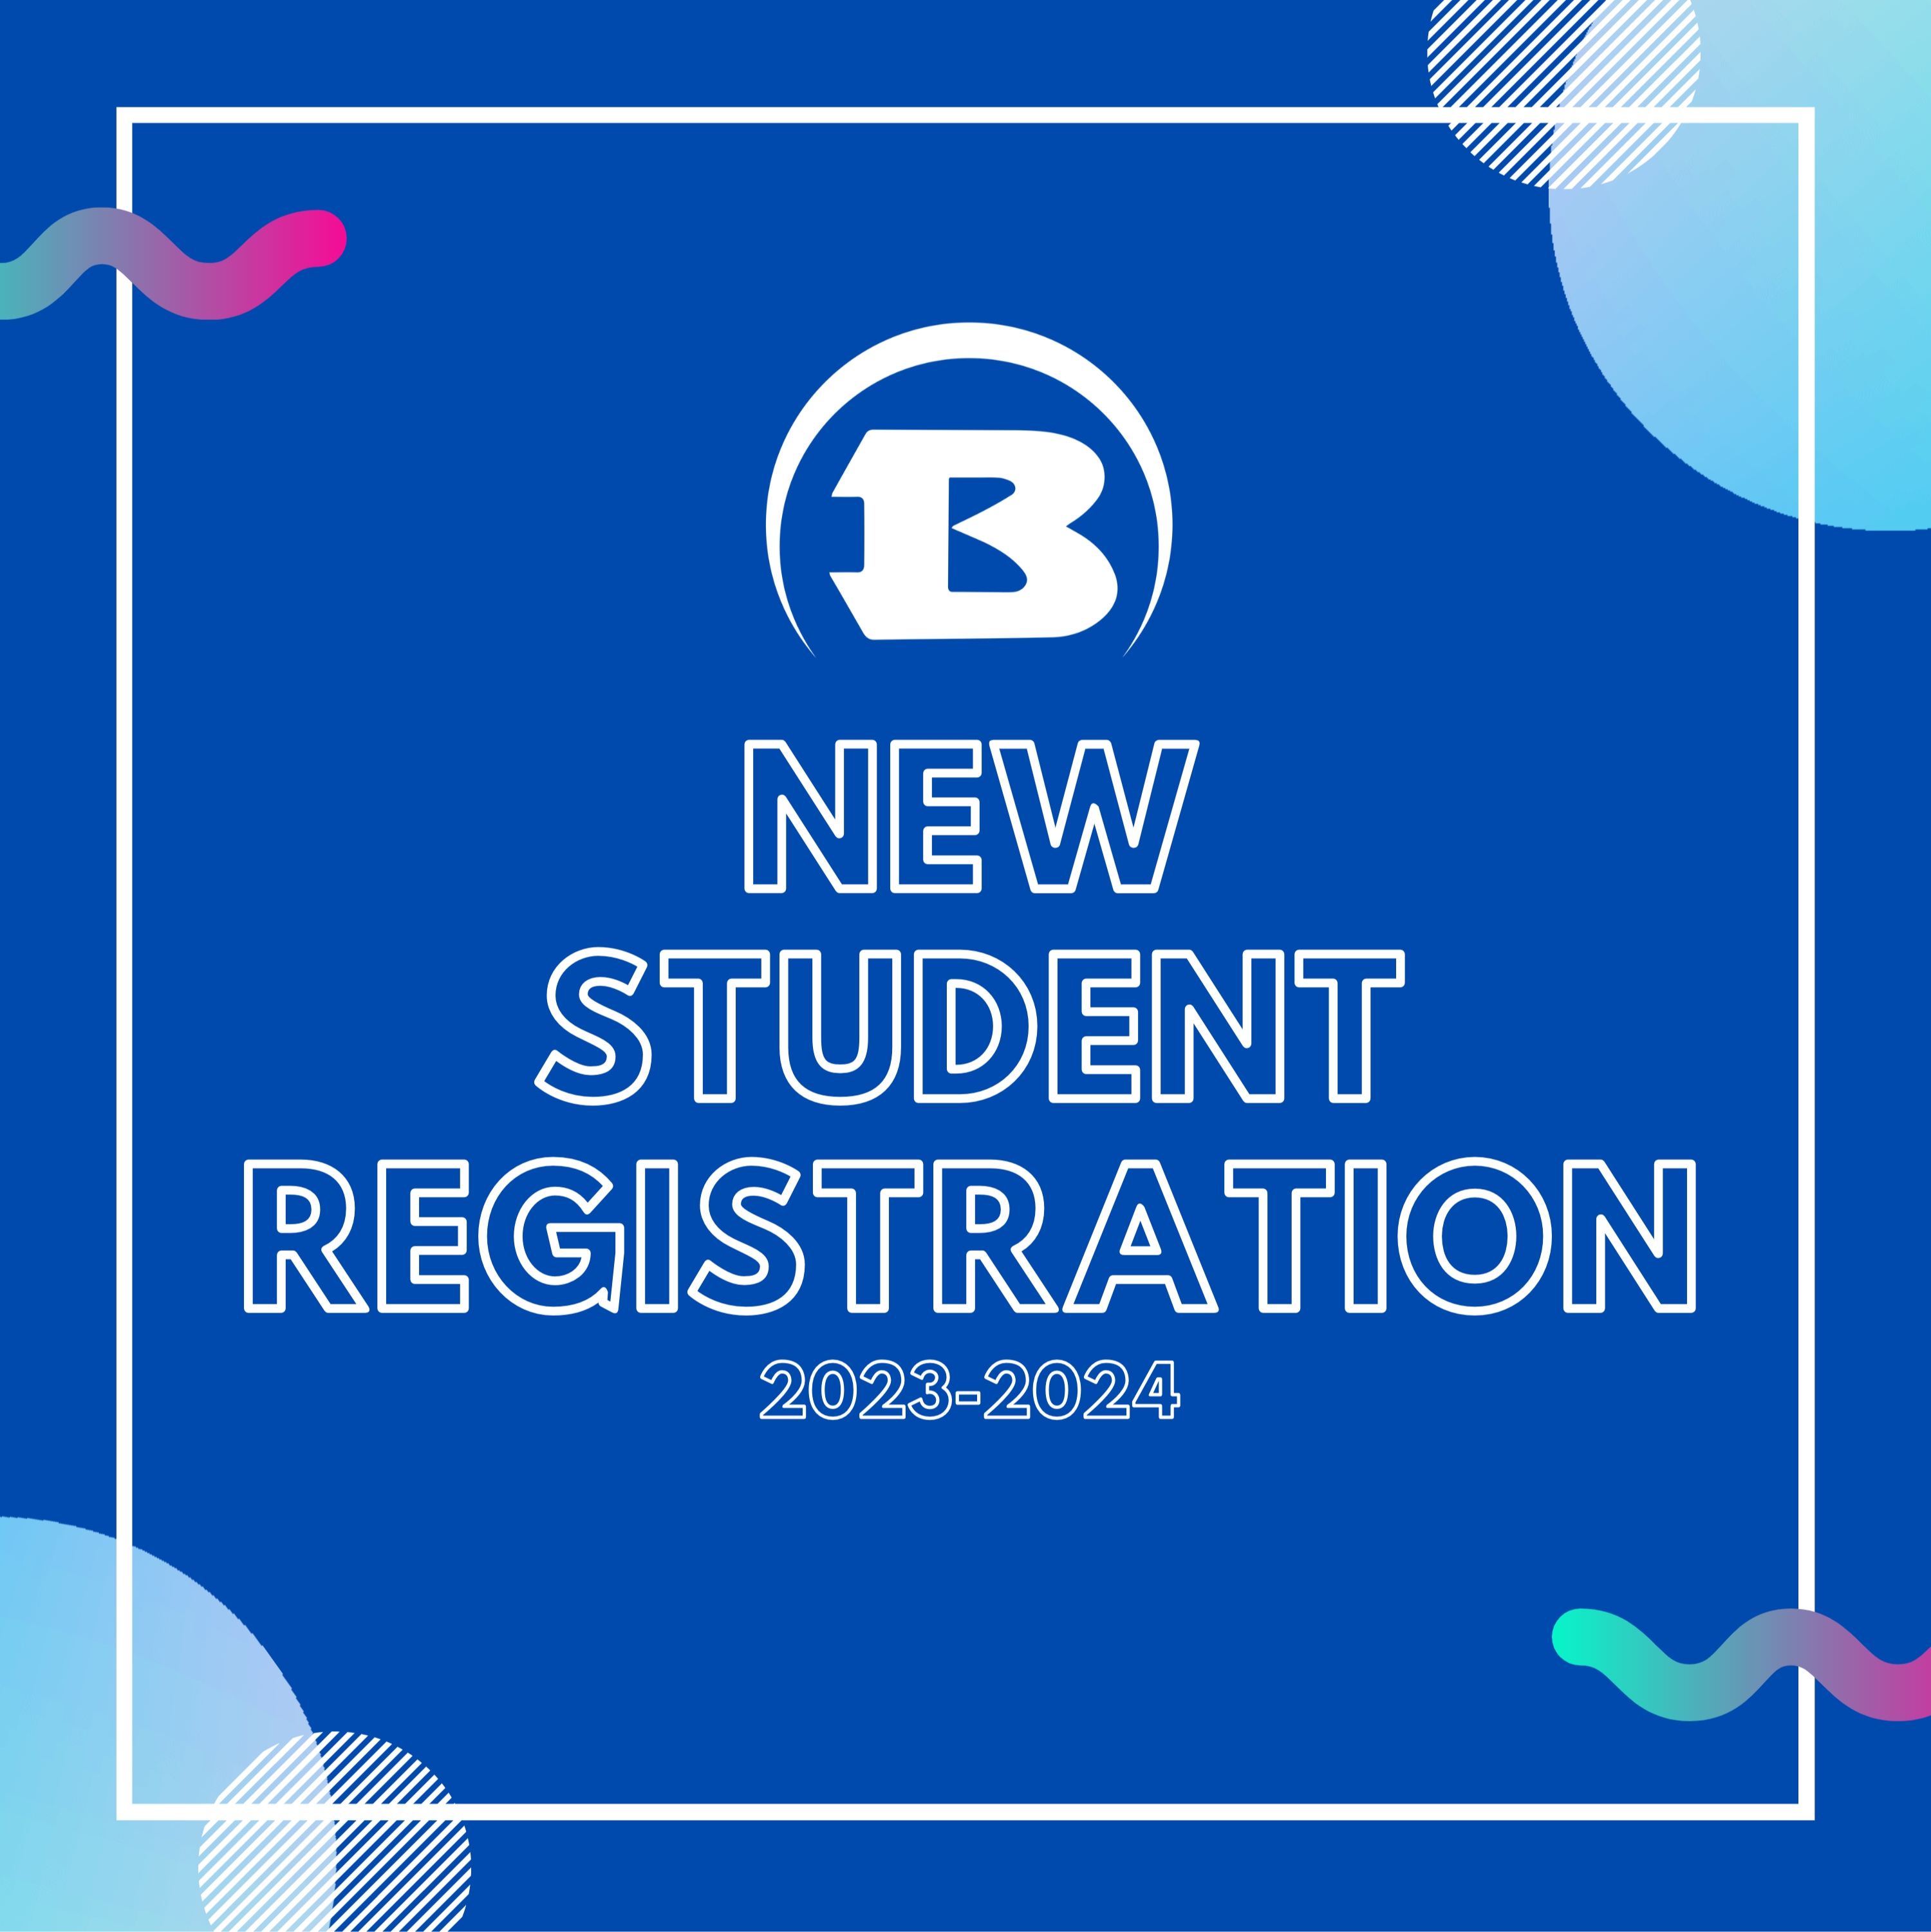 new student registration